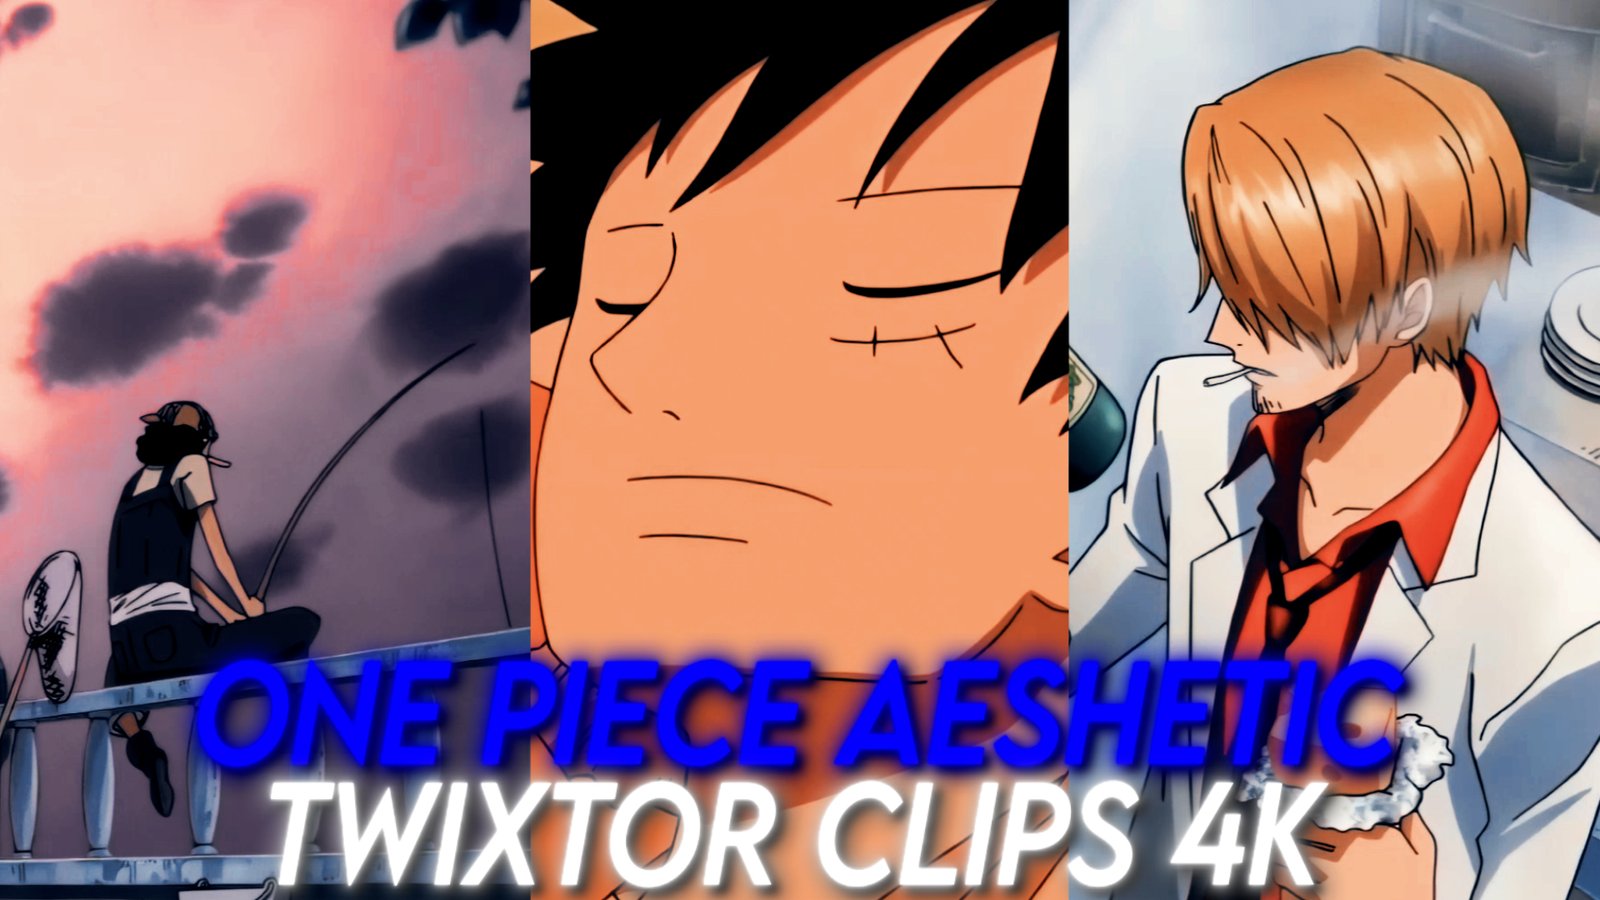 One Piece Aesthetic Twixtor